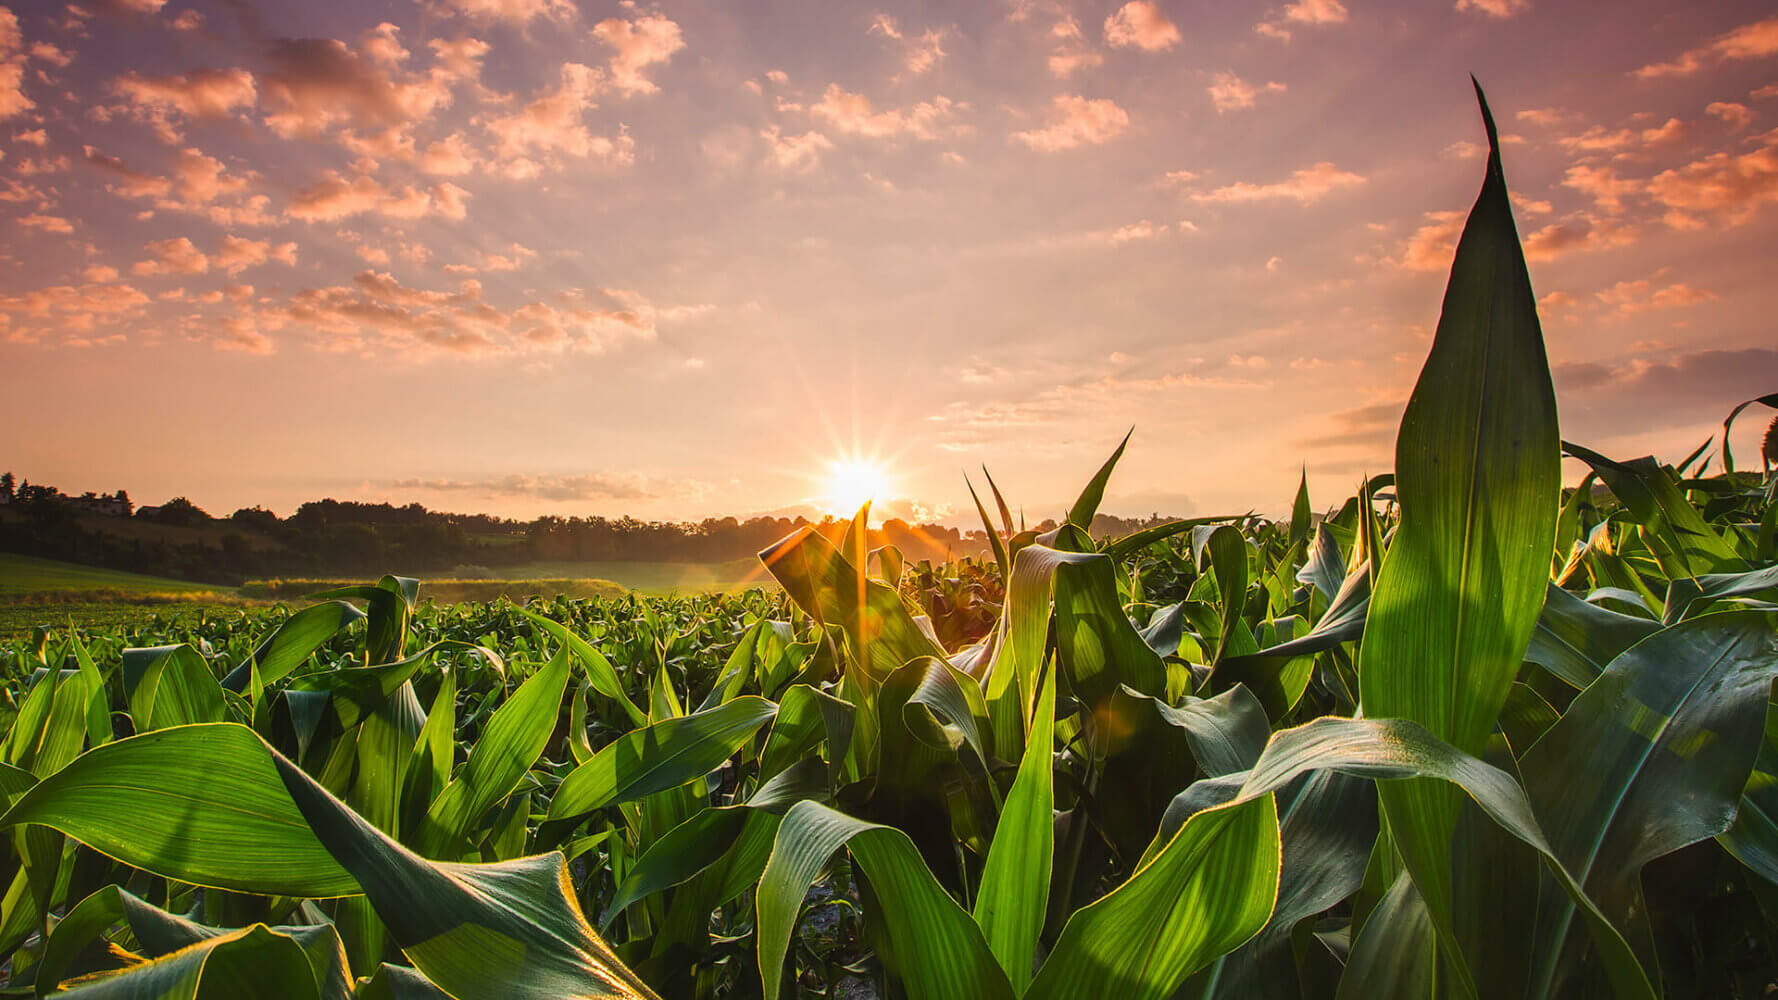 The sun shines through a cornfield, the outlook remains positive through all